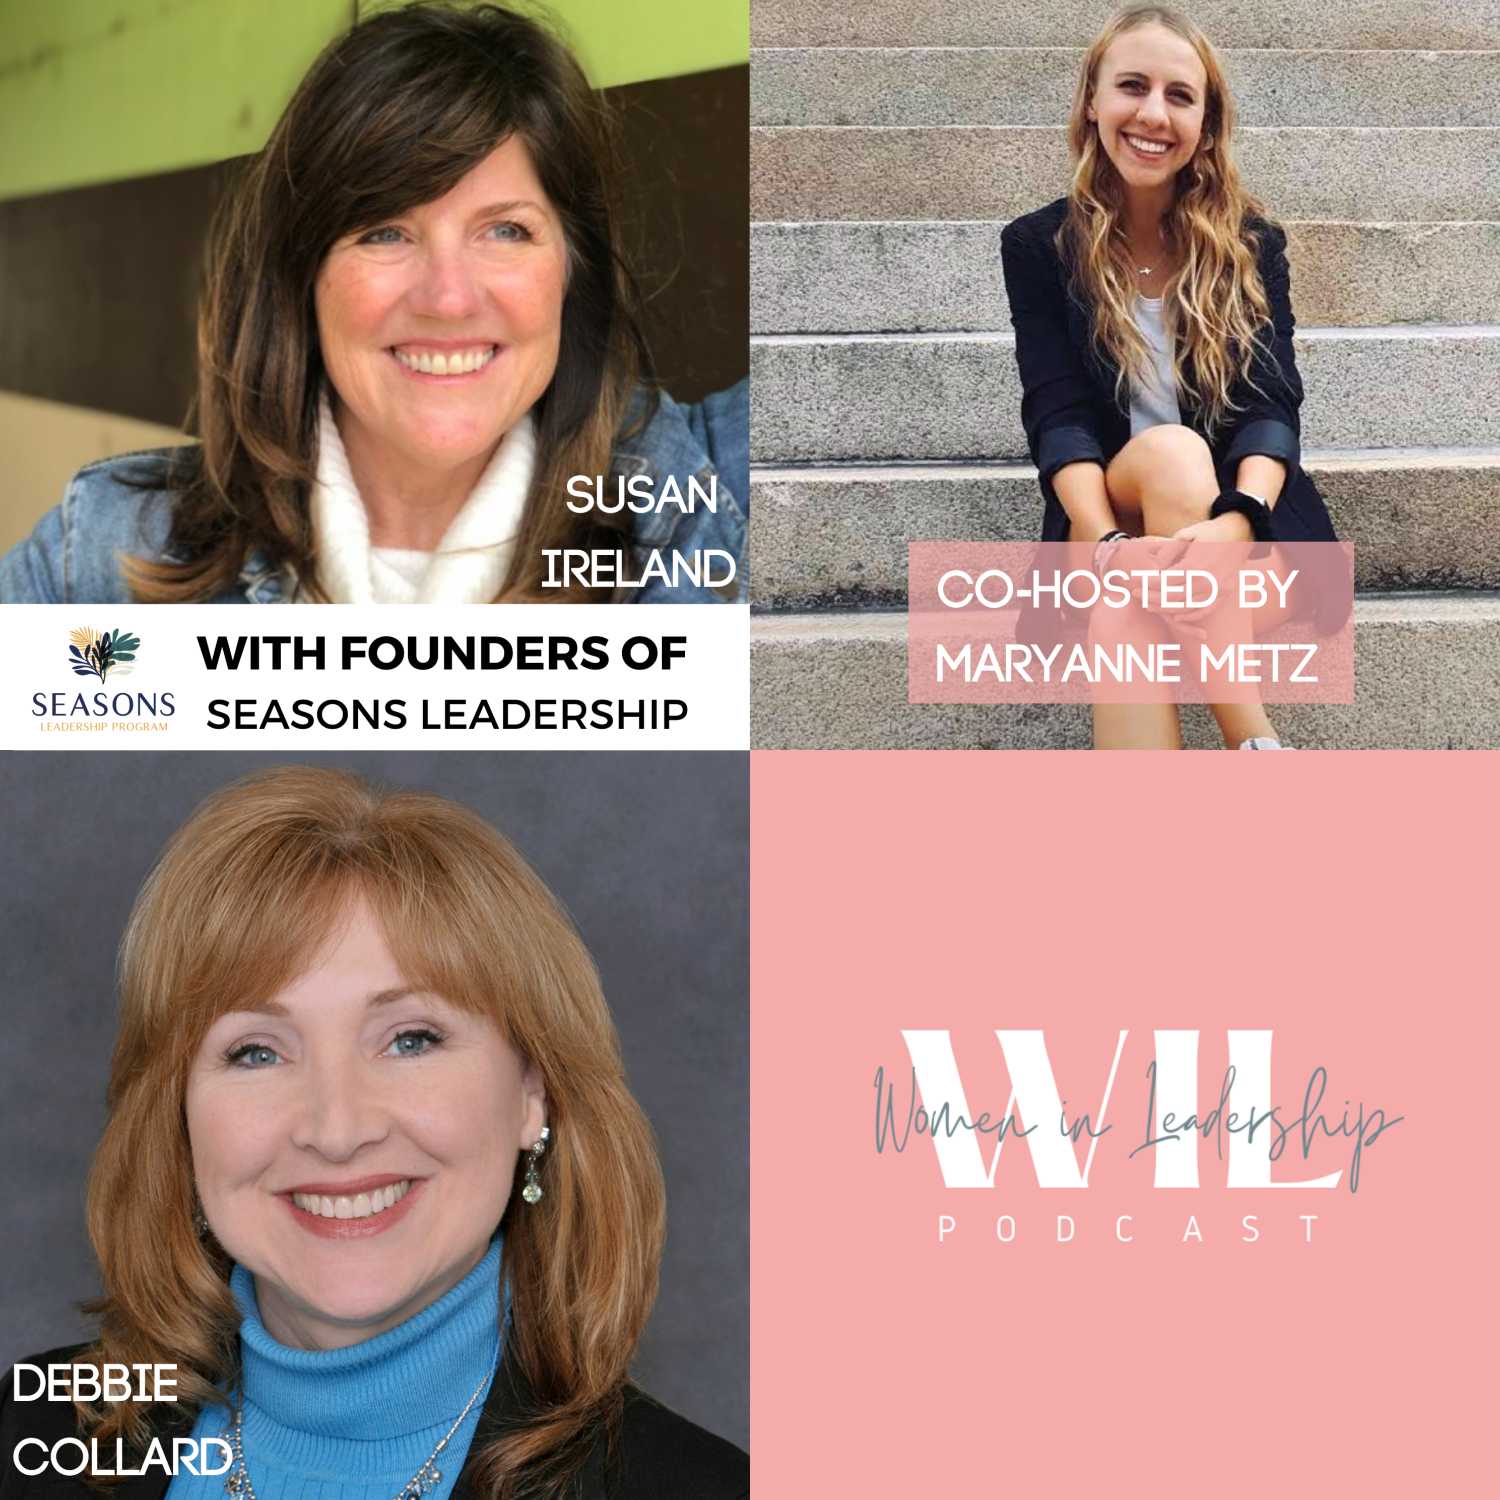 Women in Leadership Podcast